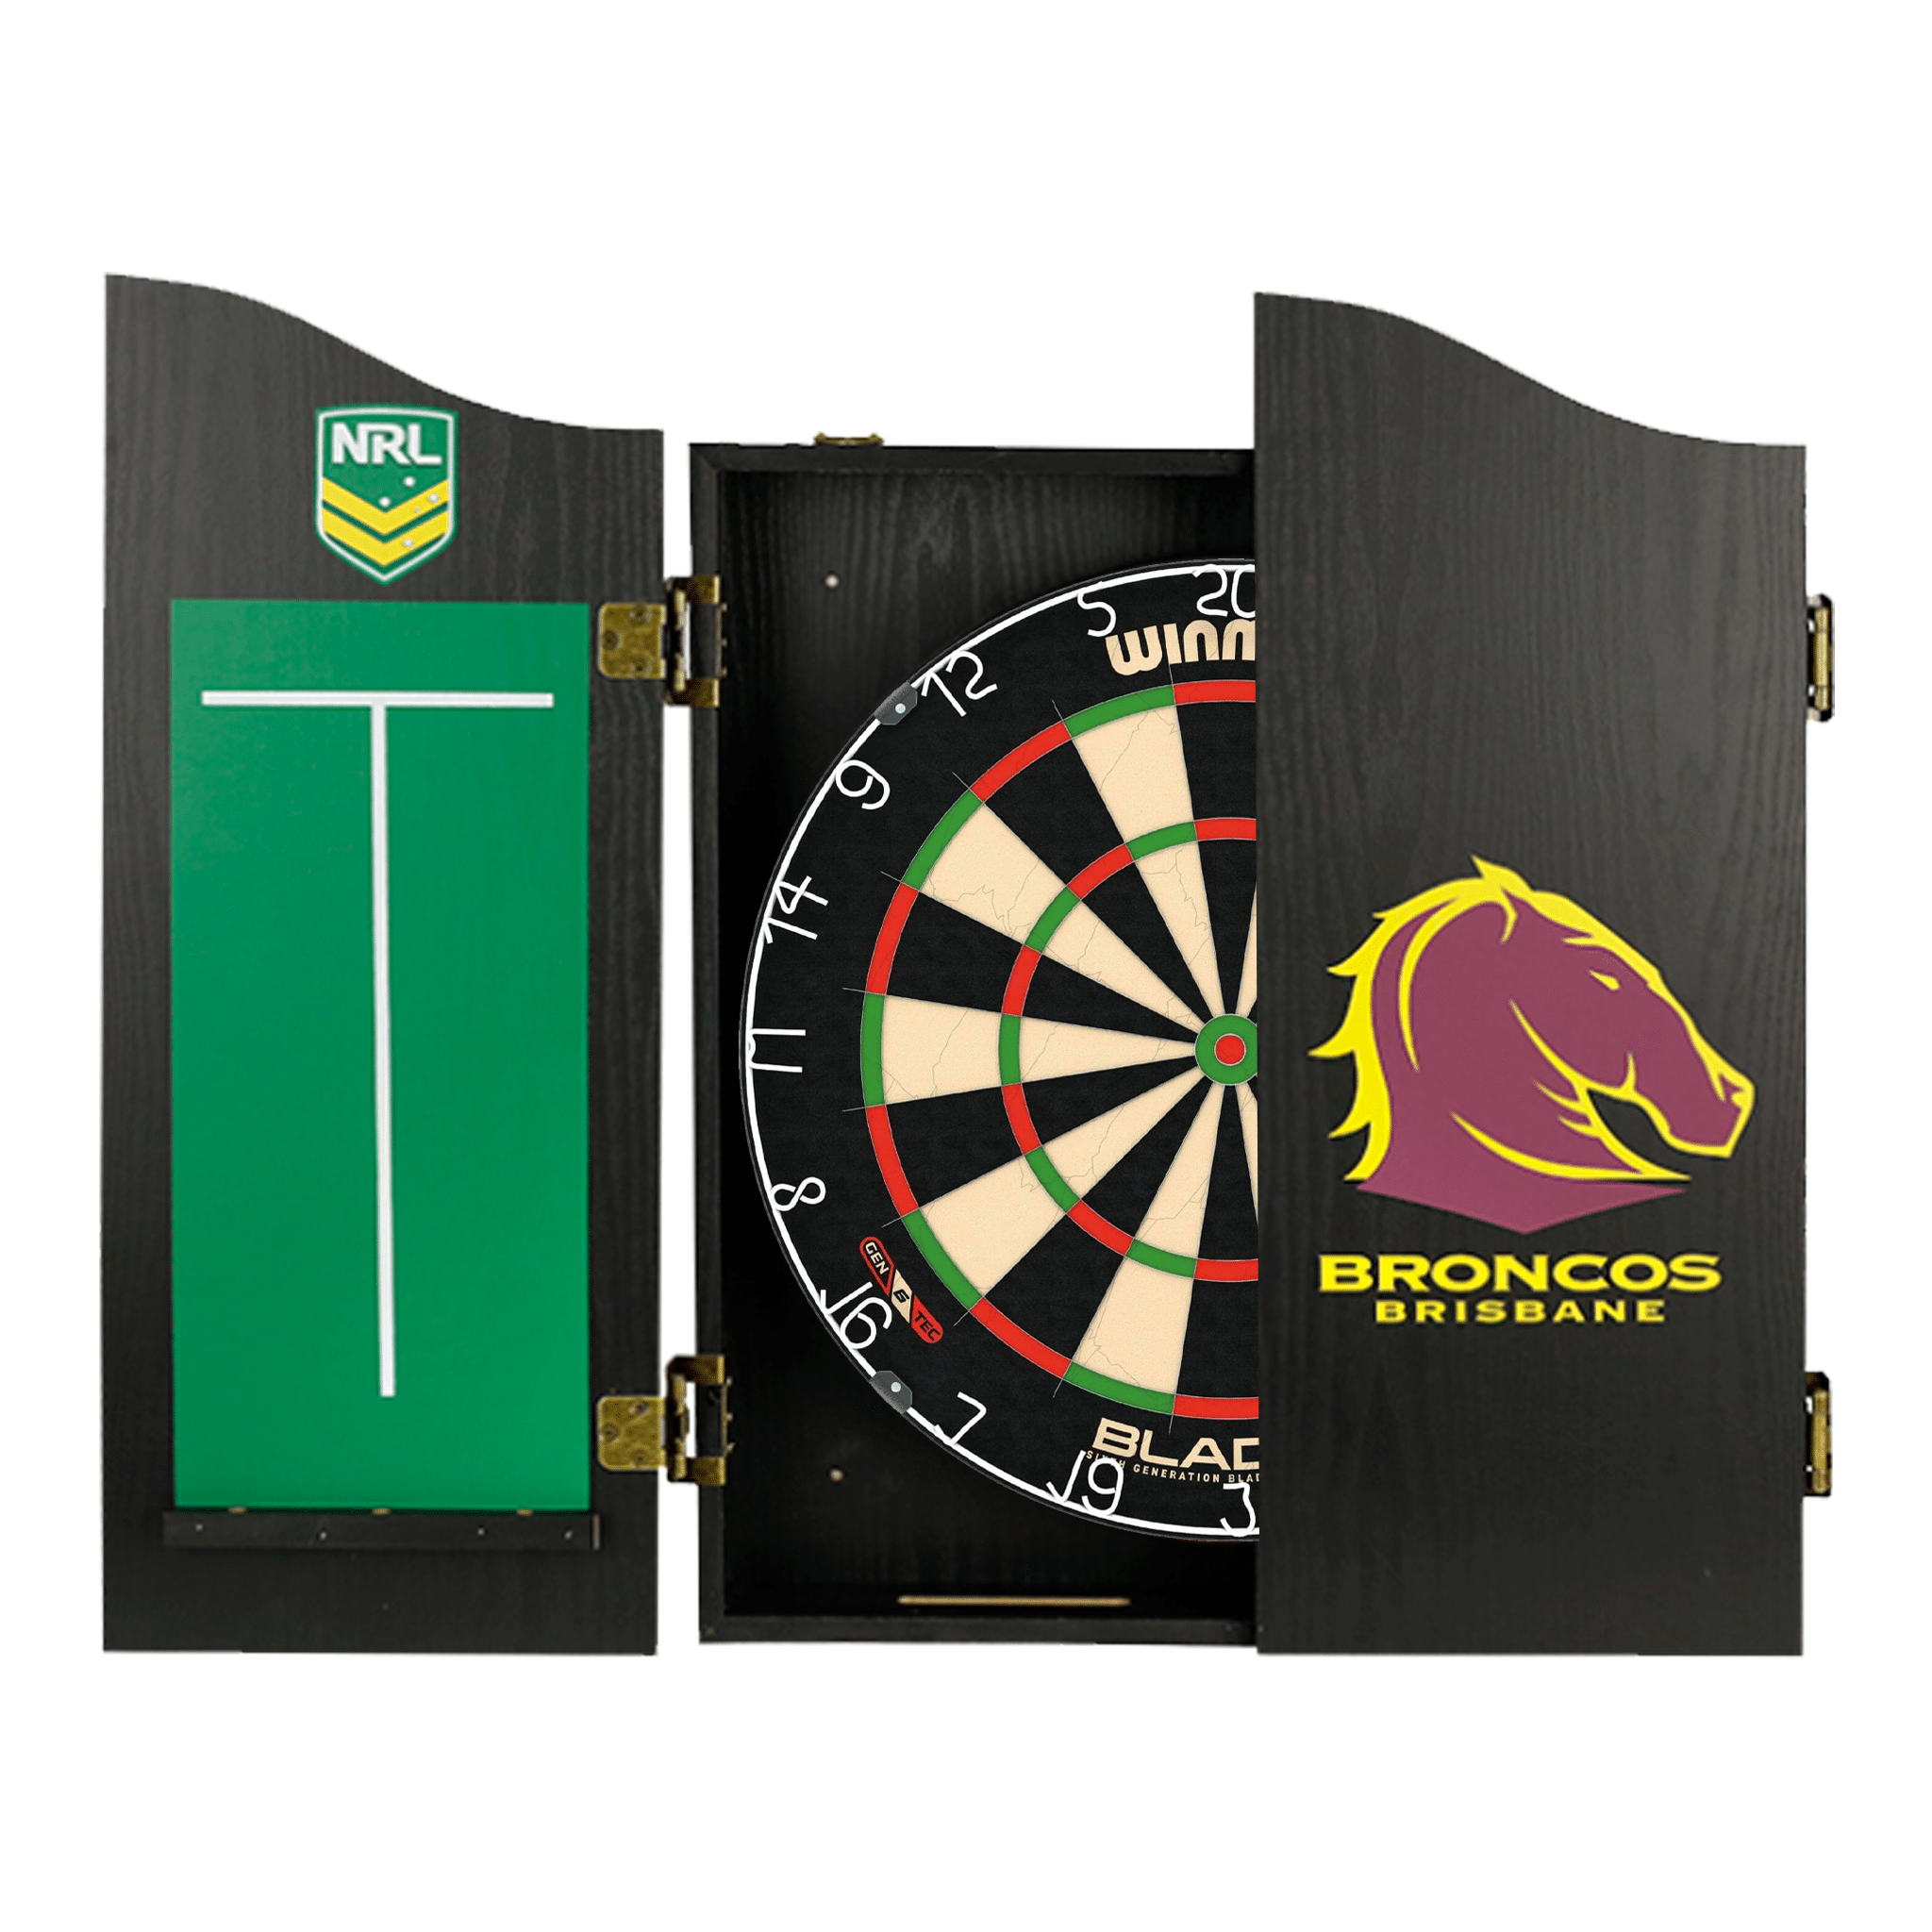 Winmau Blade 6 Dartboard, Official NRL Cabinet & Darts - Complete Darts Set Blade 6 / Brisbane Broncos Boards